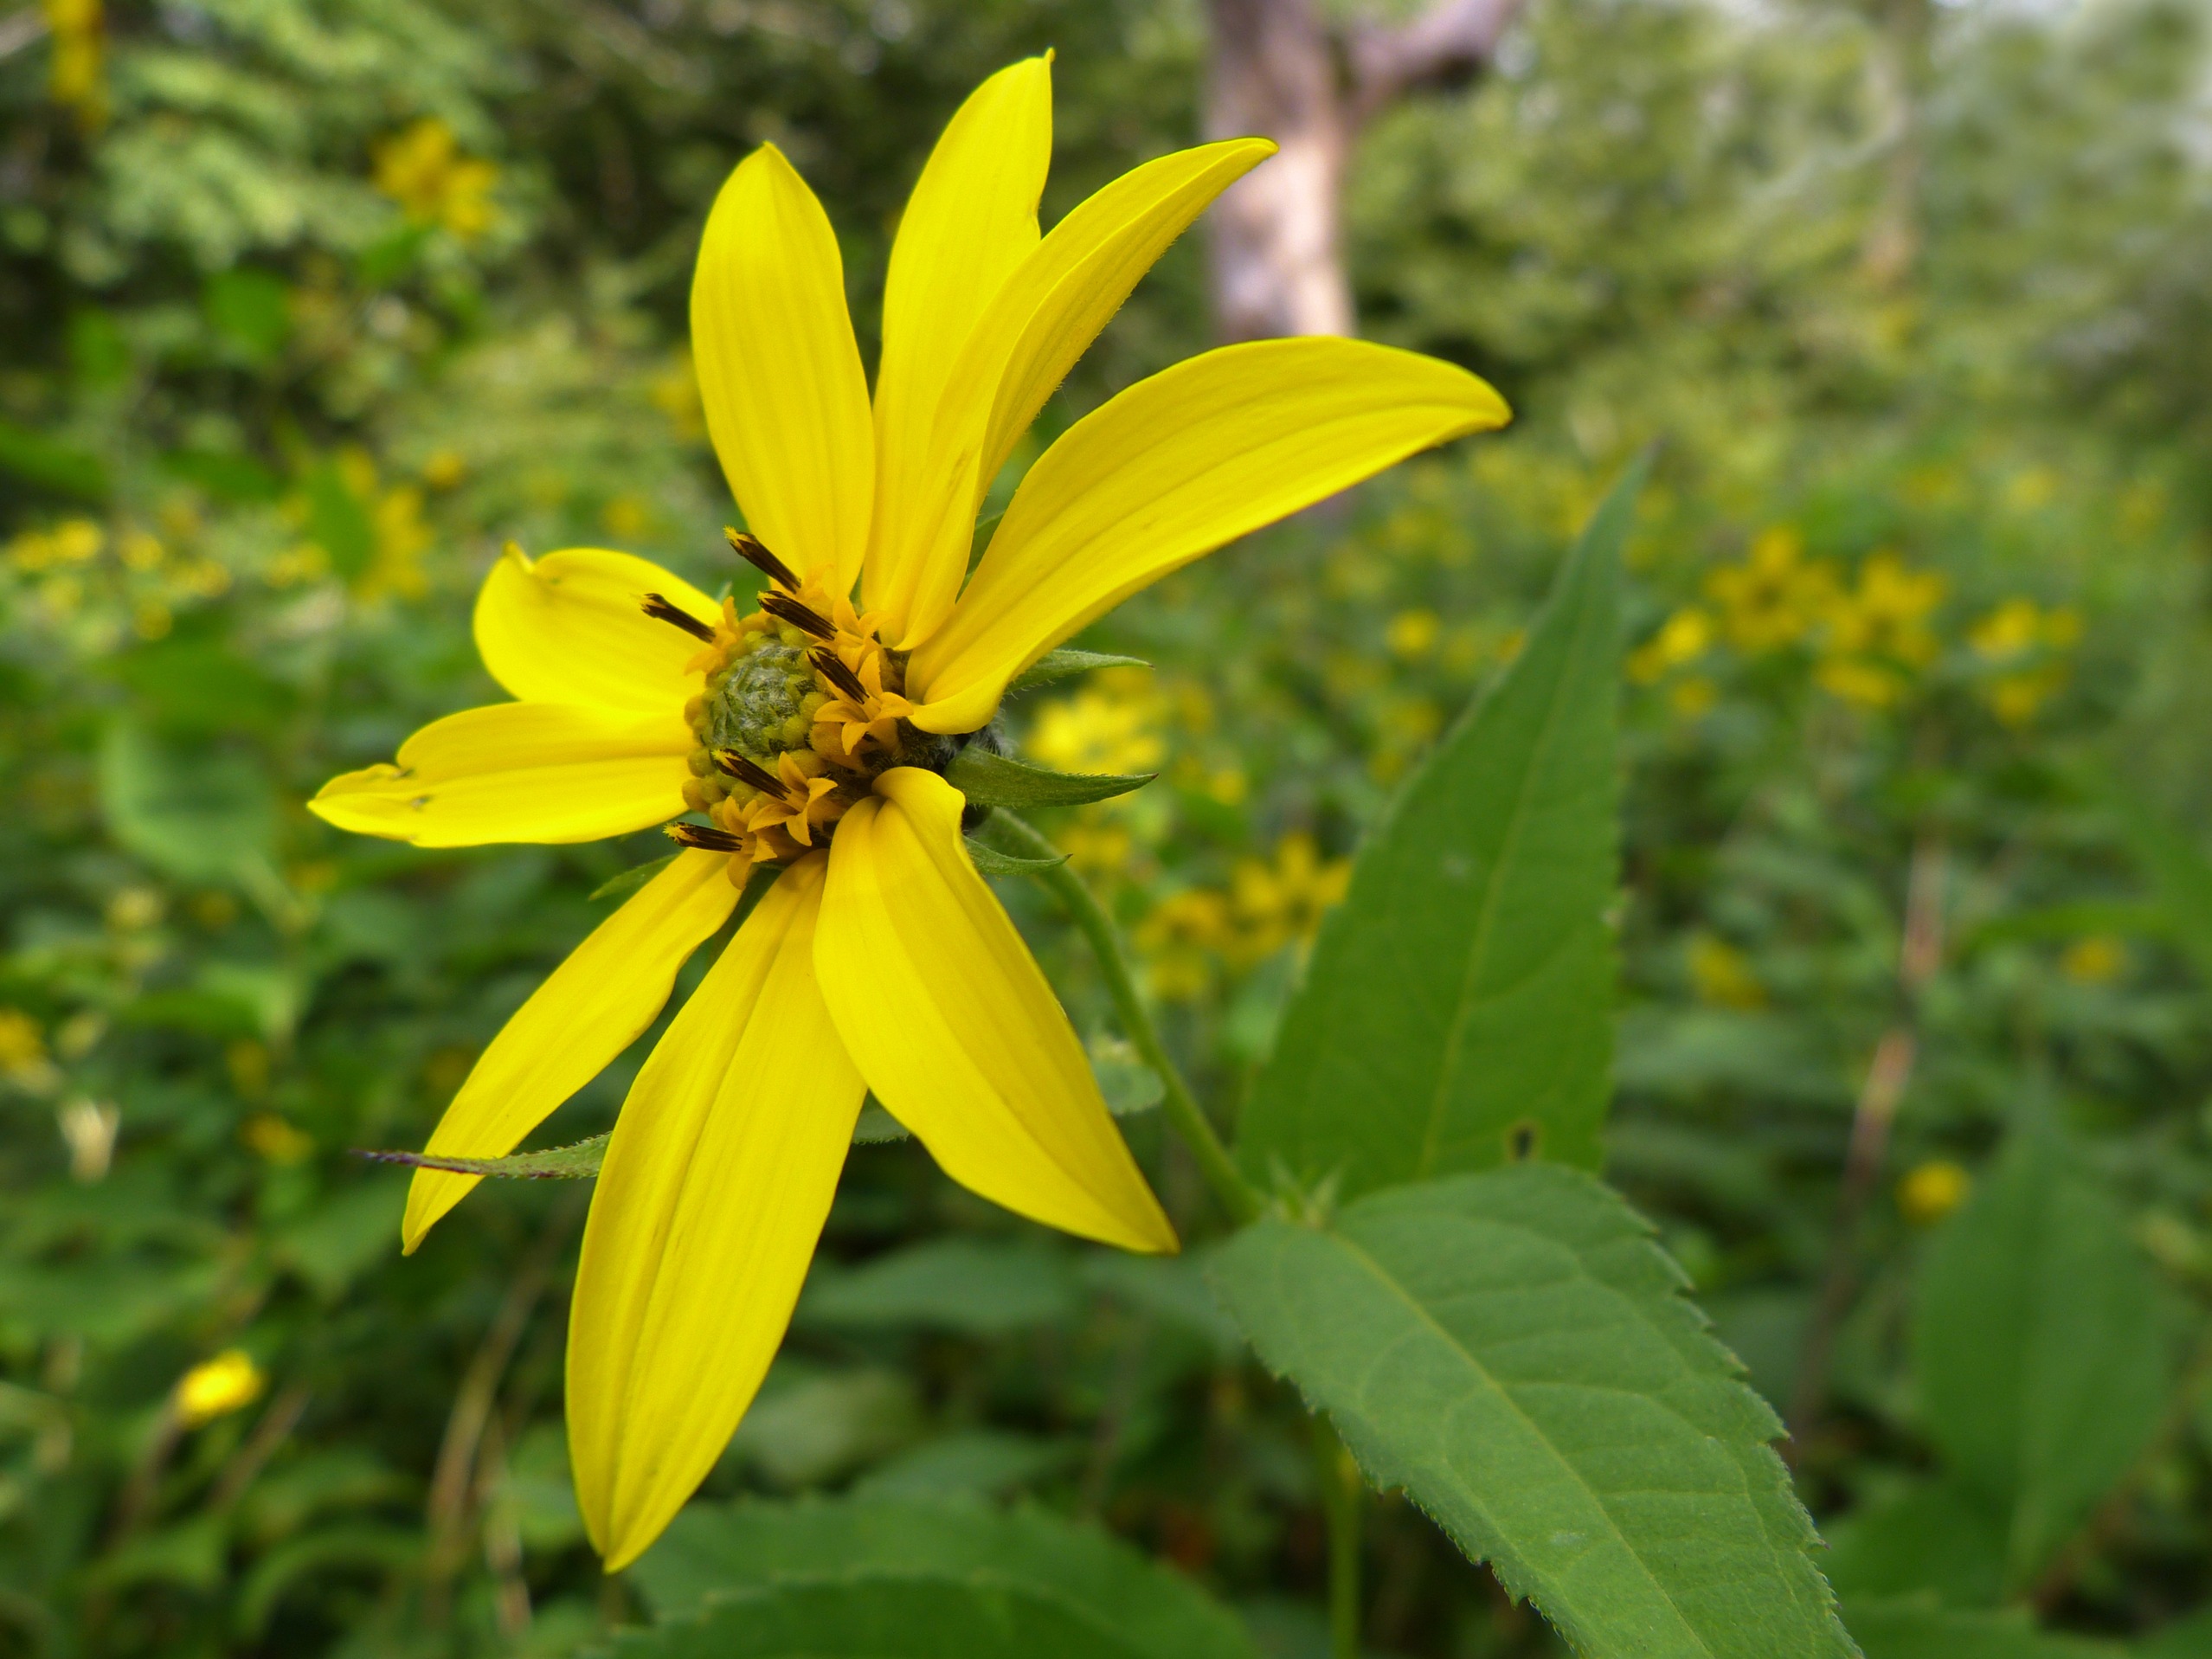 Tickseed sunflower  -  Fryingpan Mountain Trail, Pisgah National Forest, North Carolina